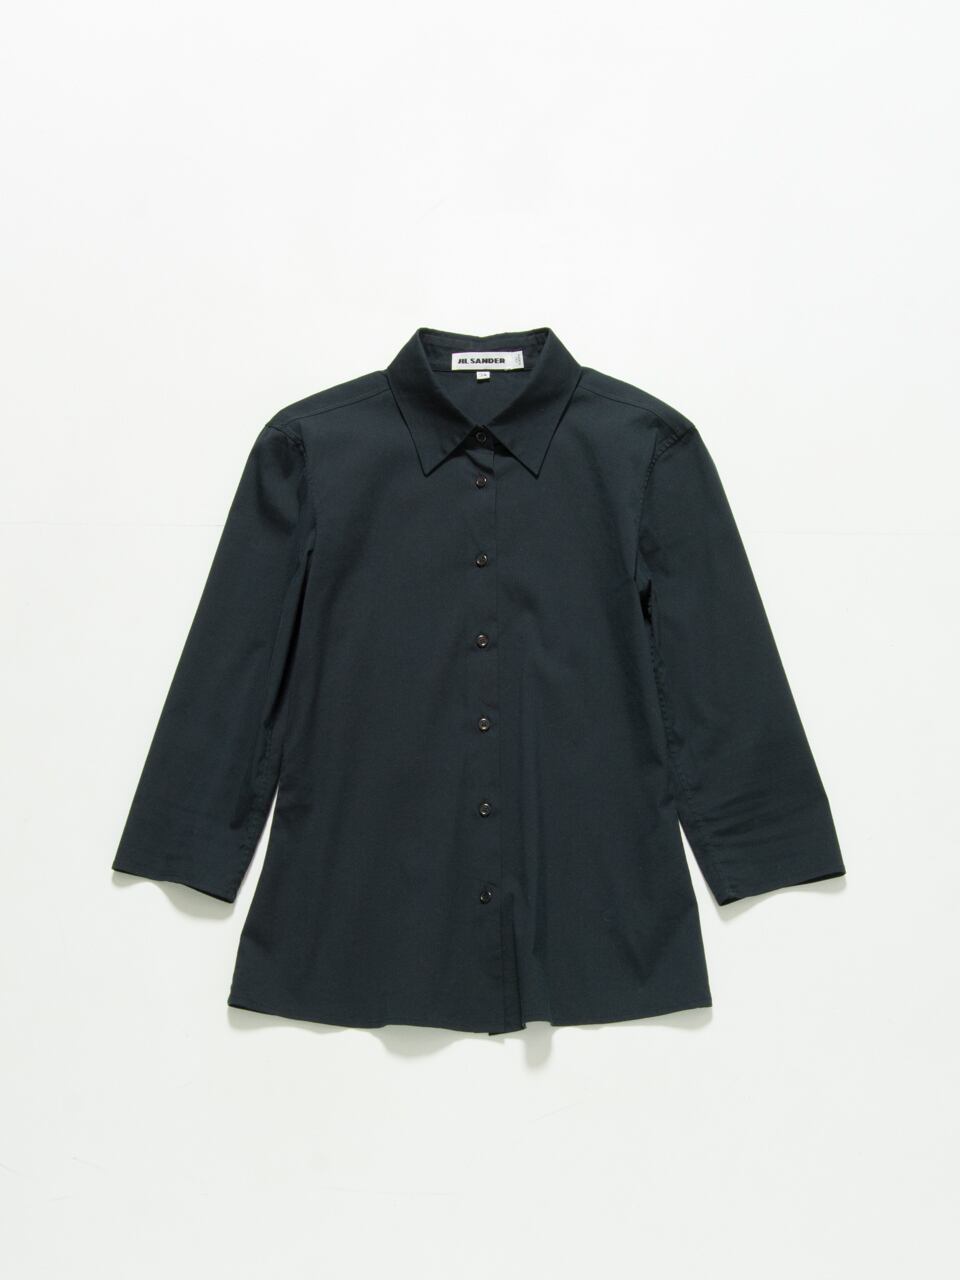 【JIL SANDER】Made in Italy stretch shirt（ジルサンダー イタリア製ストレッチシャツ）1a